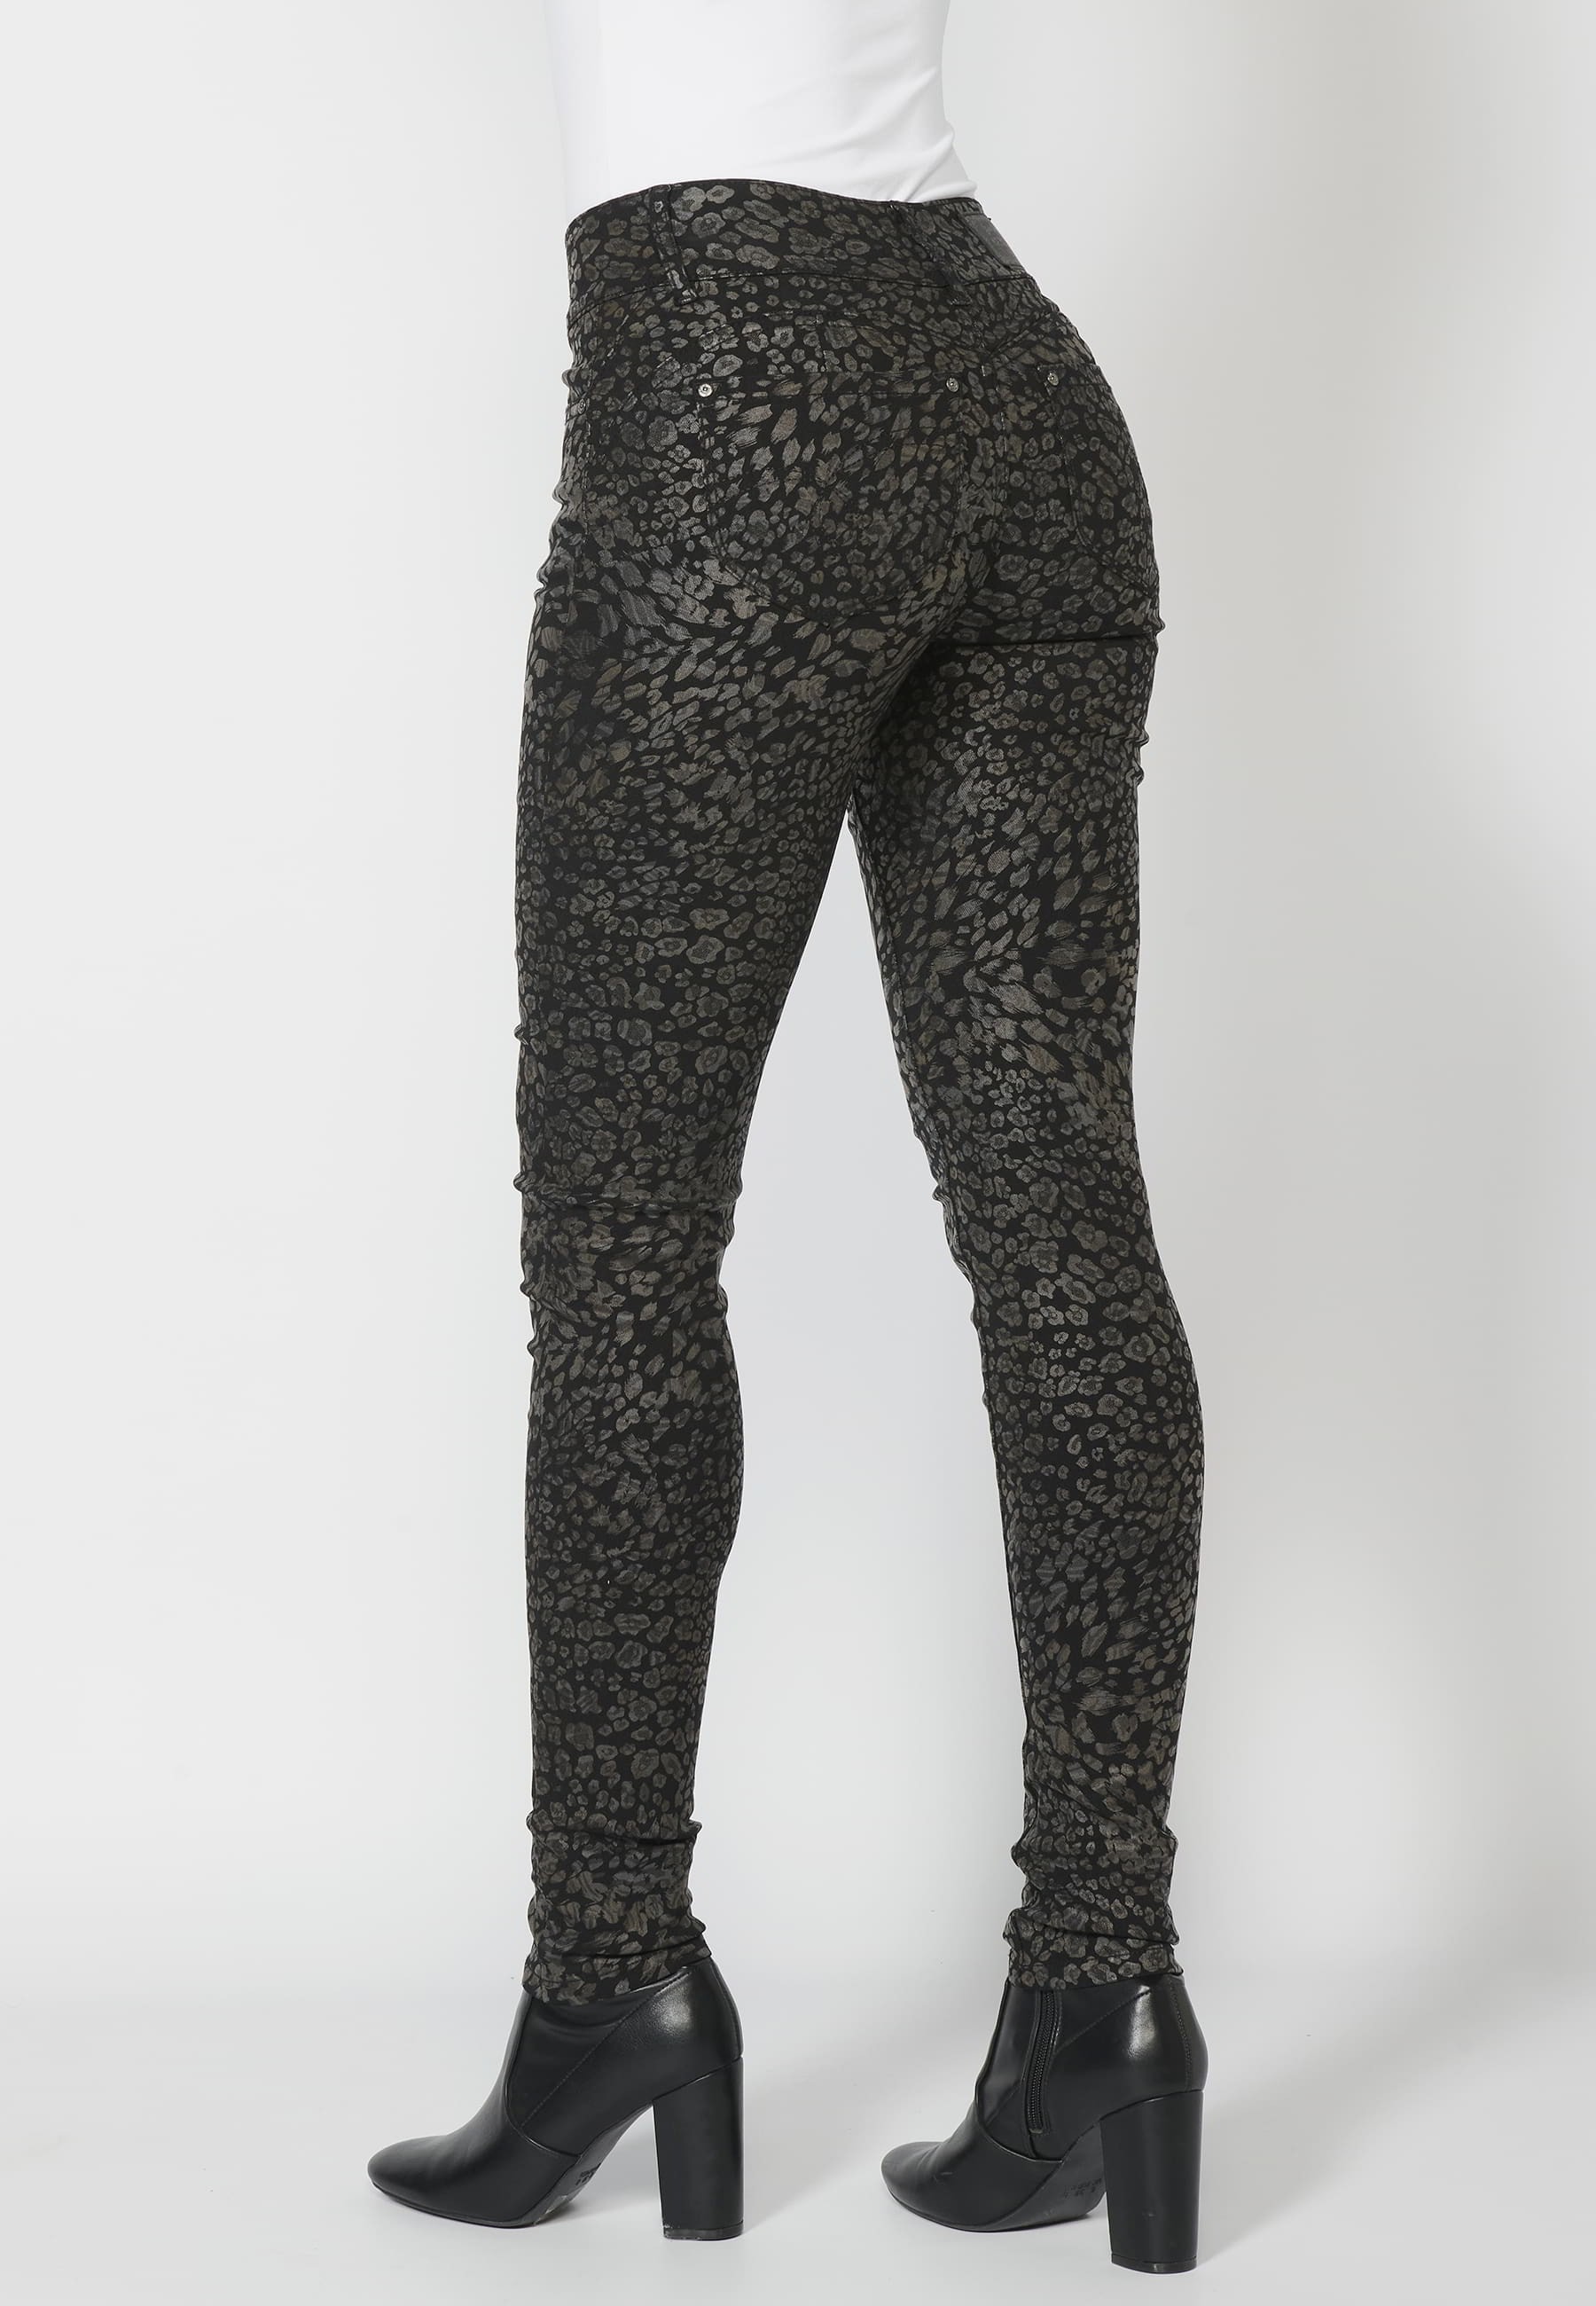 Black animal print slim fit long pants for Woman 7